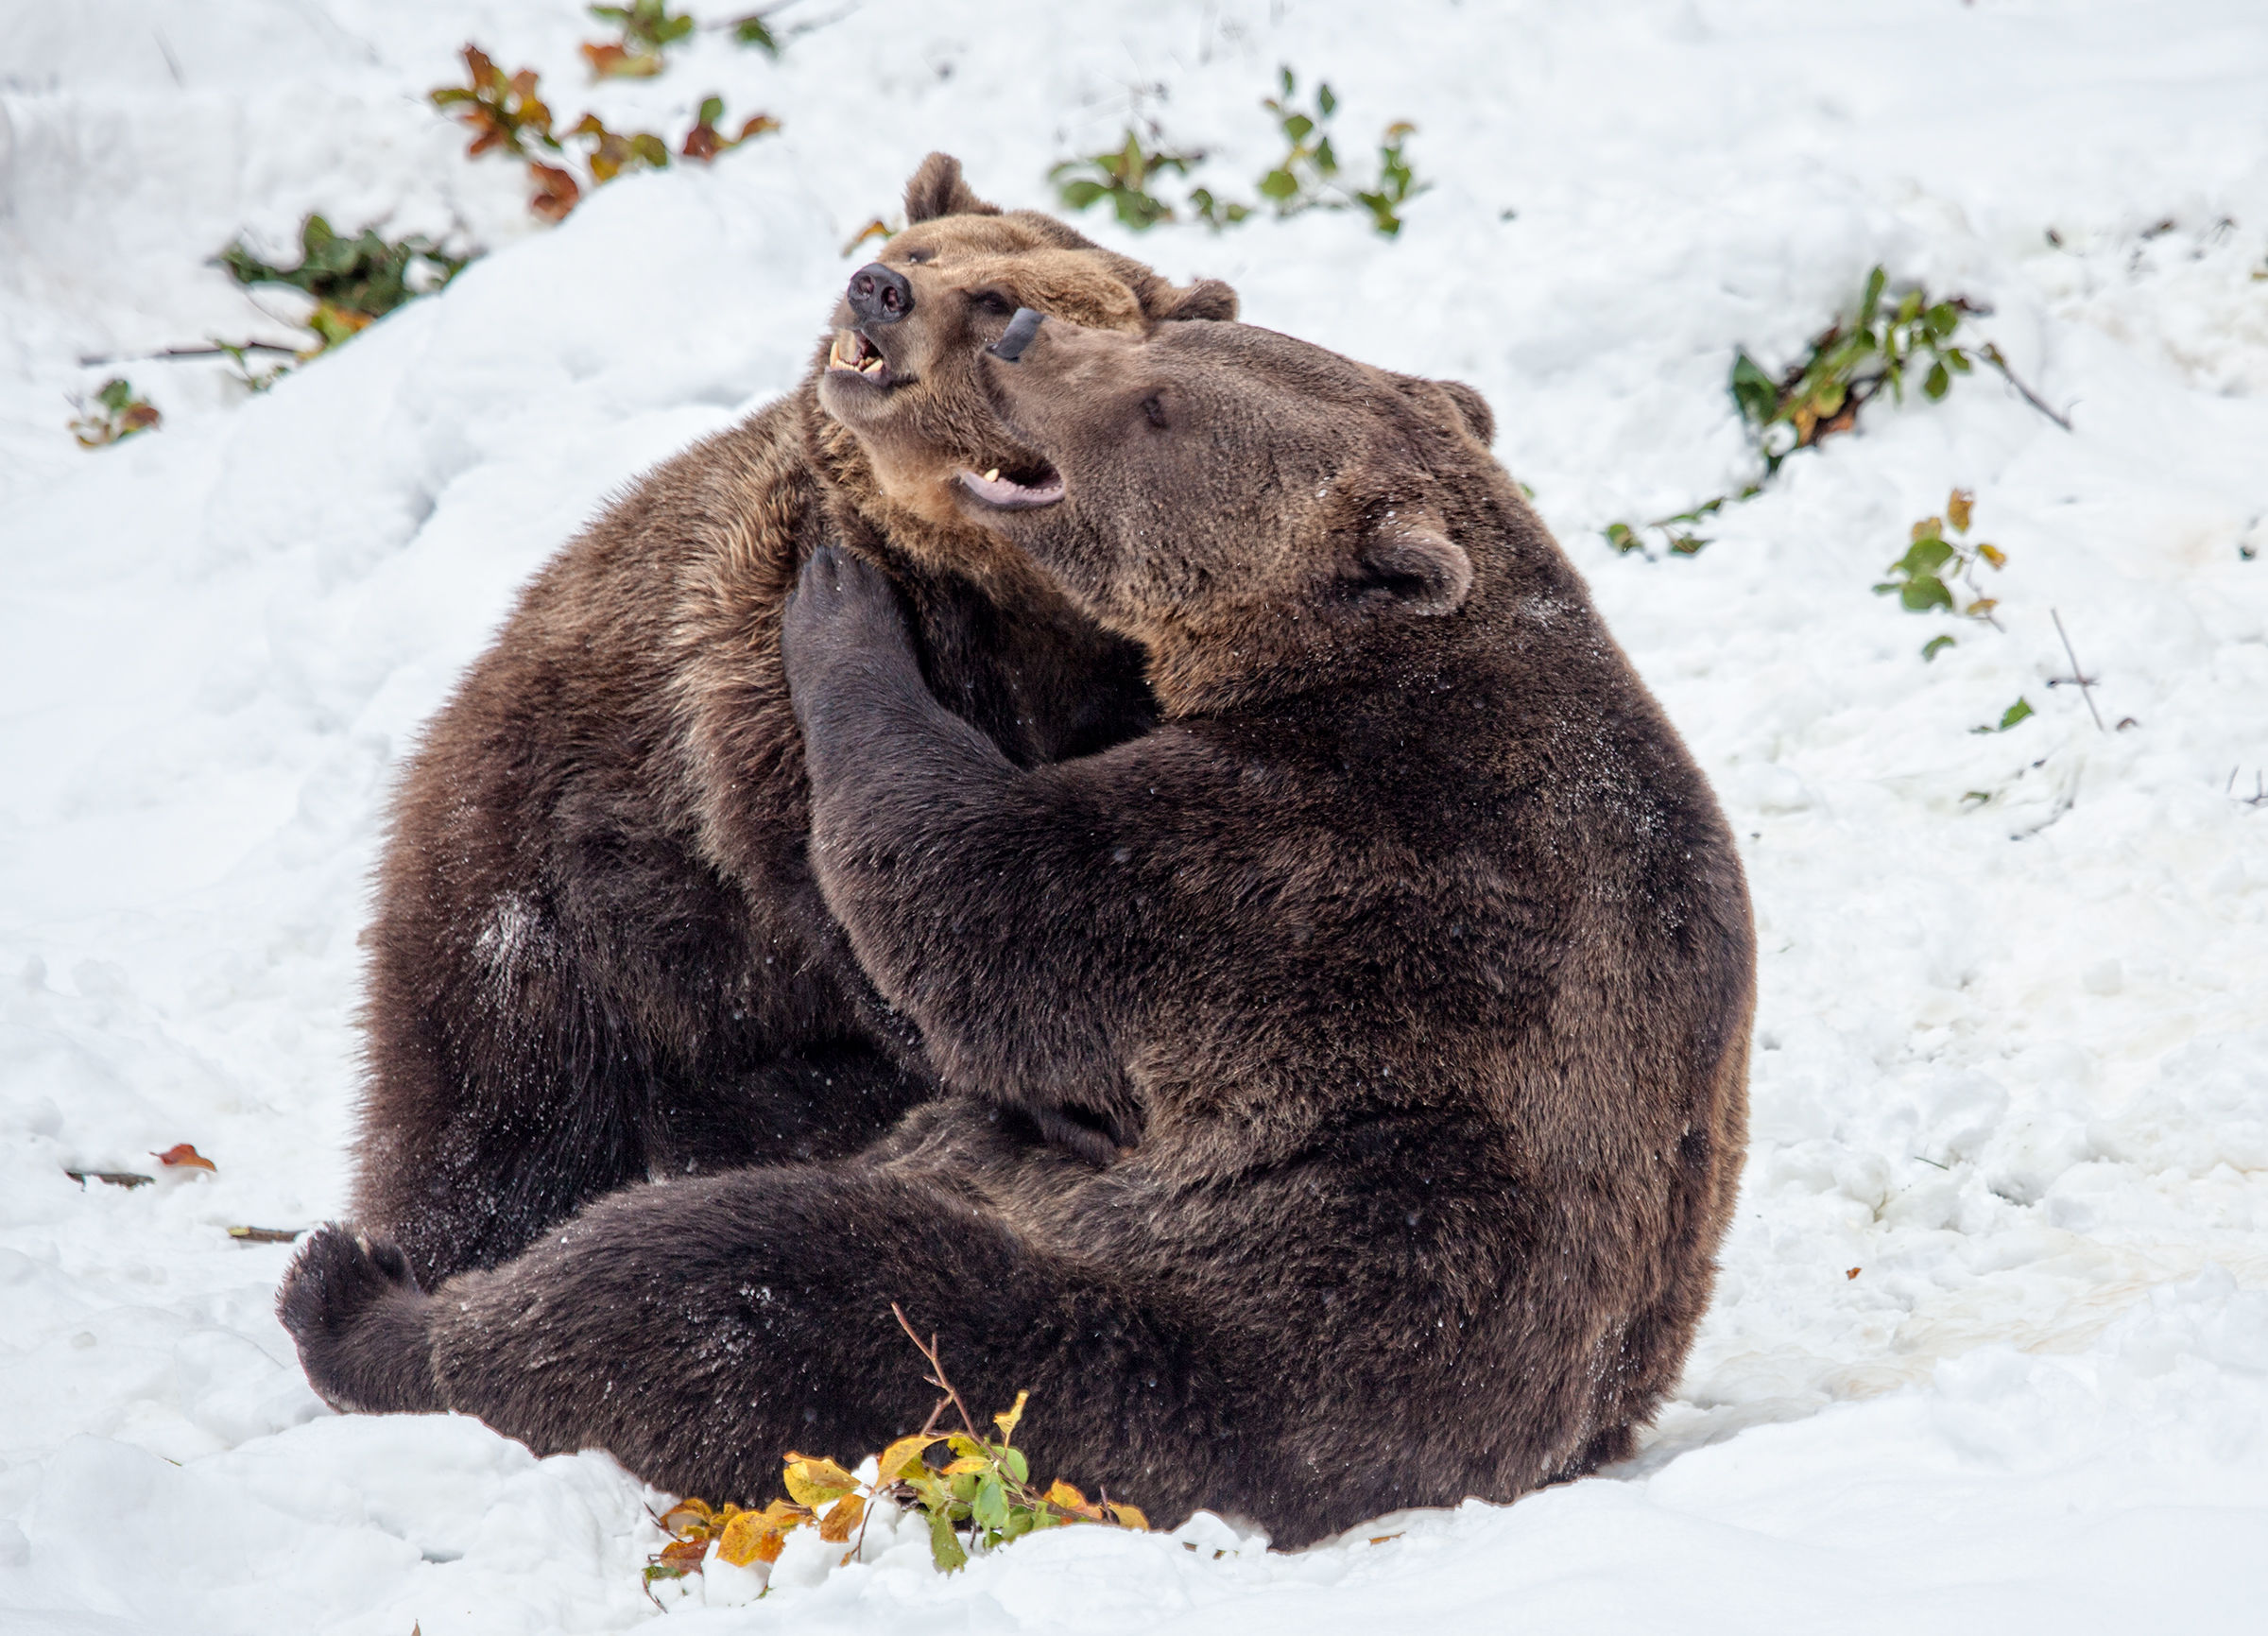 Loving bears...